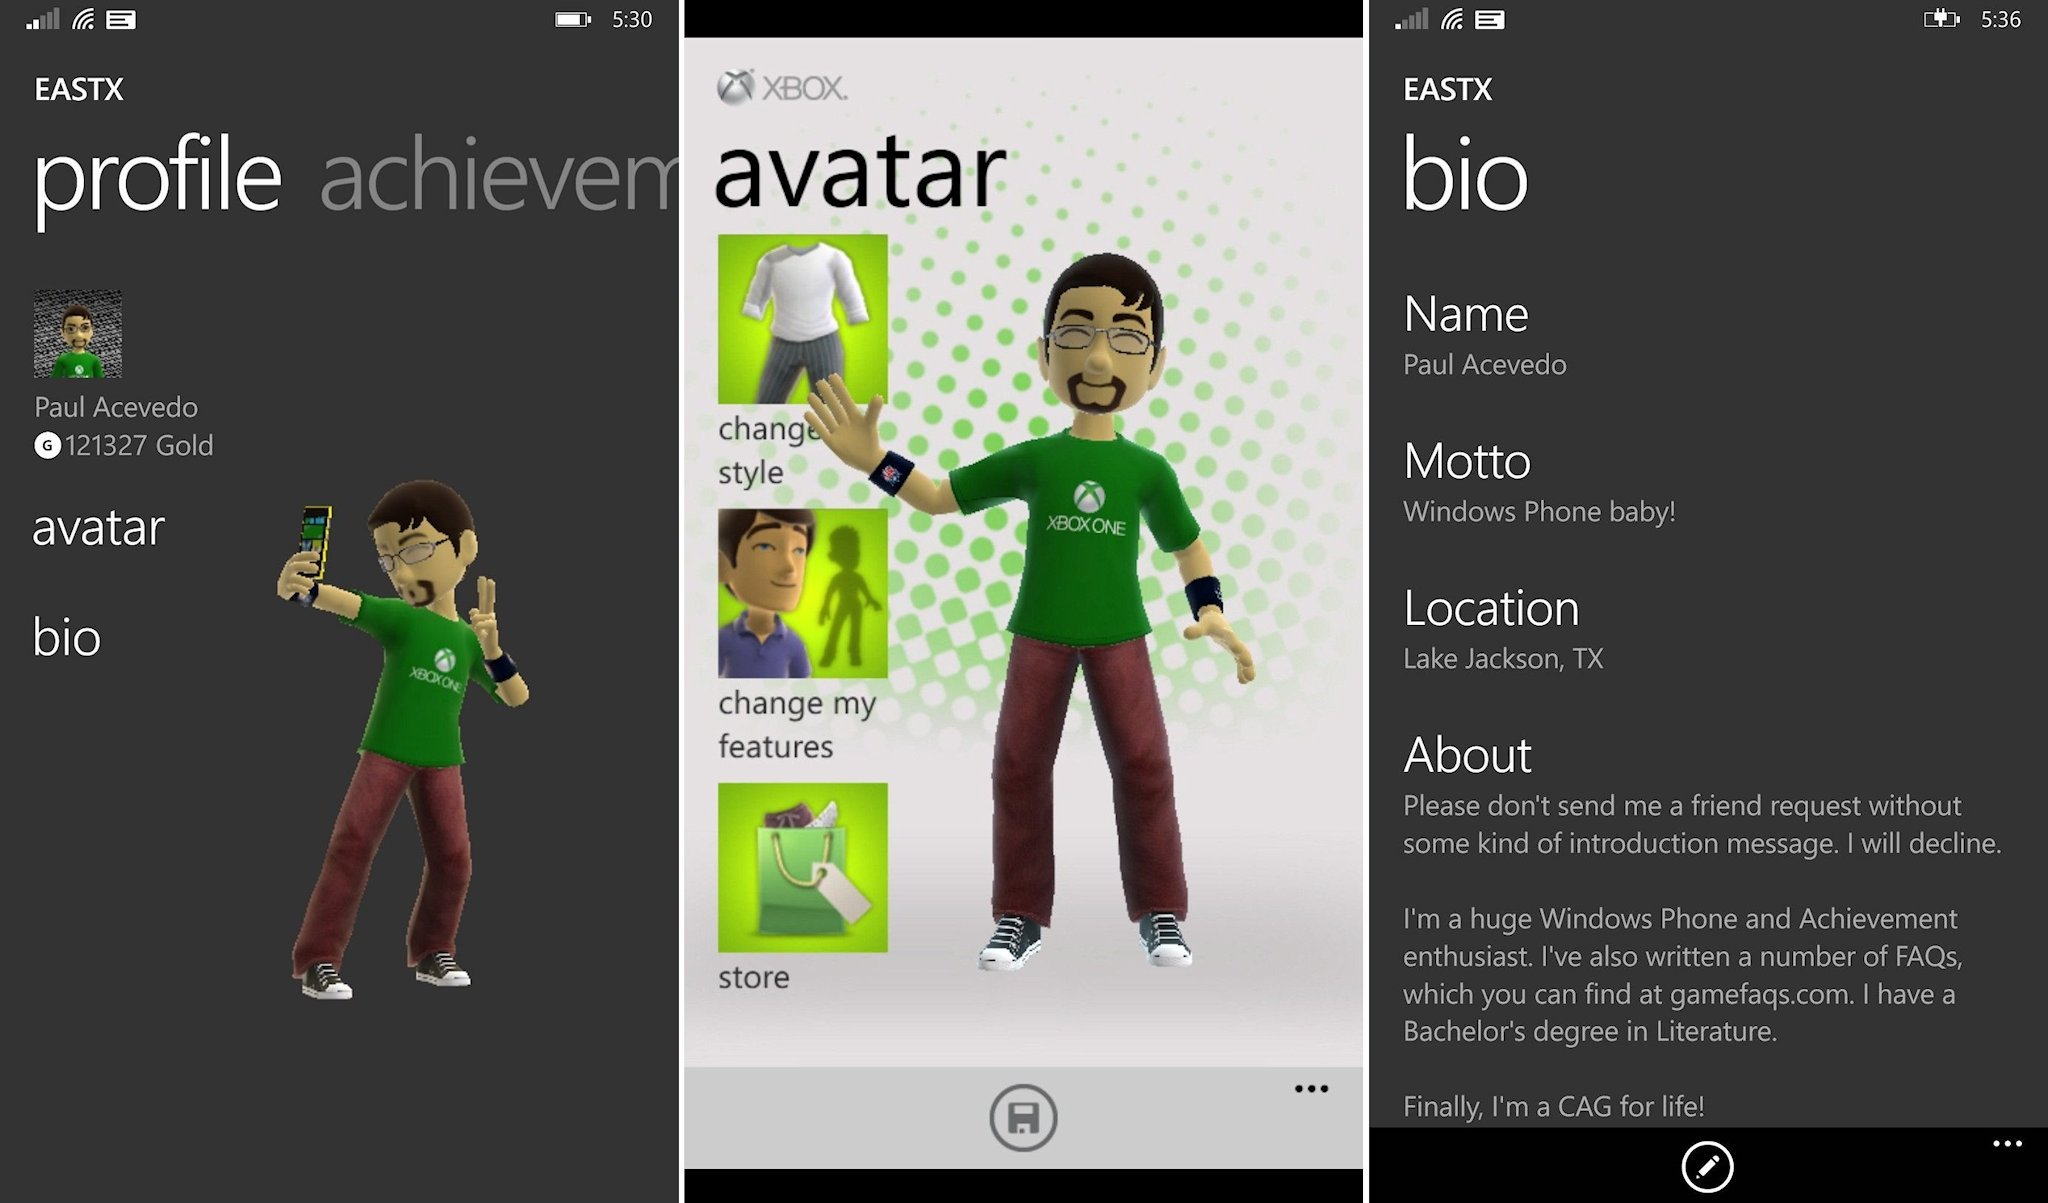 Windows Phone 8.1 Xbox Games App